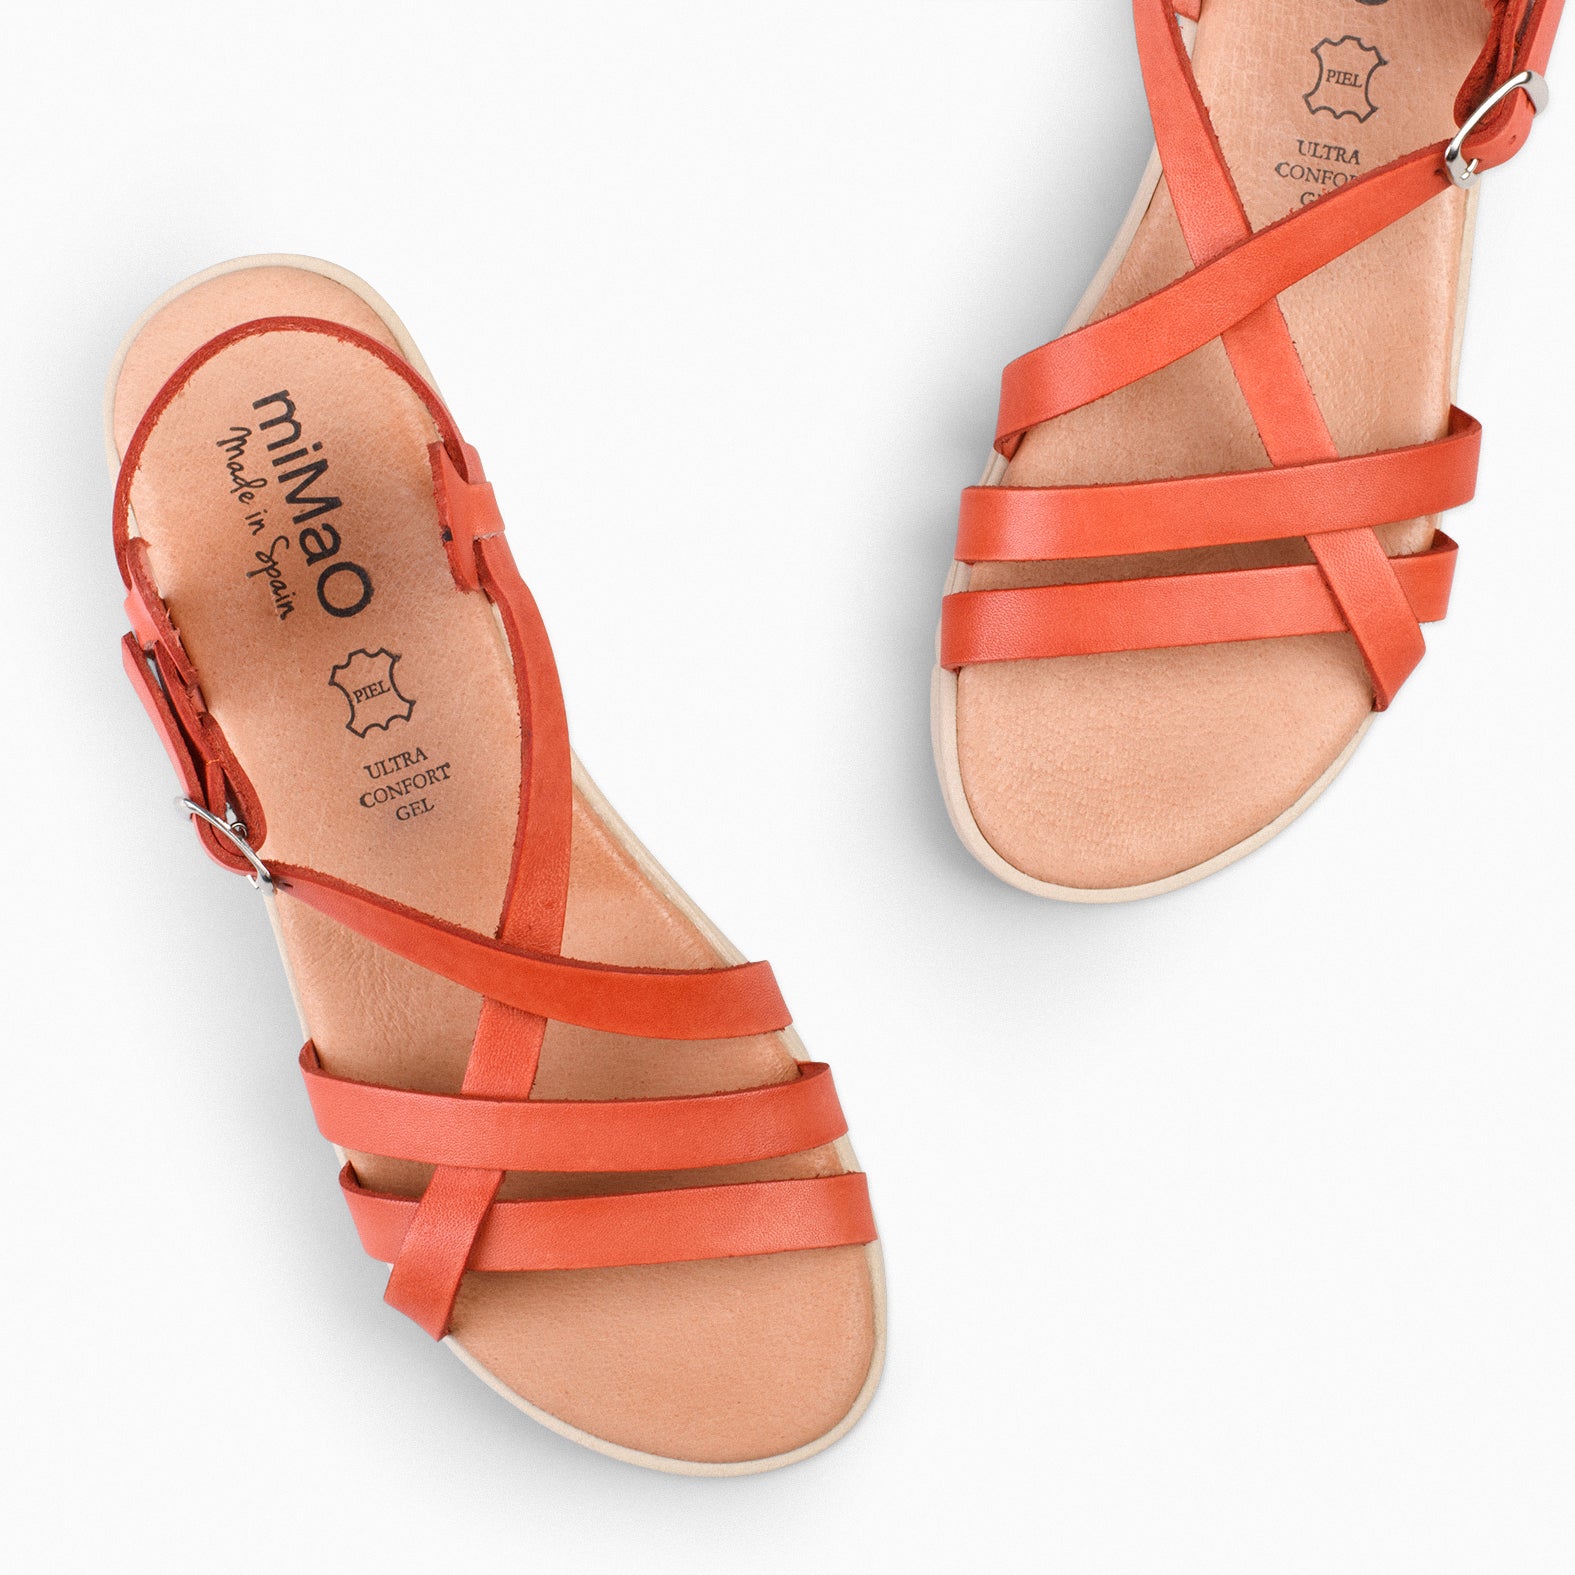 SPIRIT – ORANGE Flat sandal with crossed strap